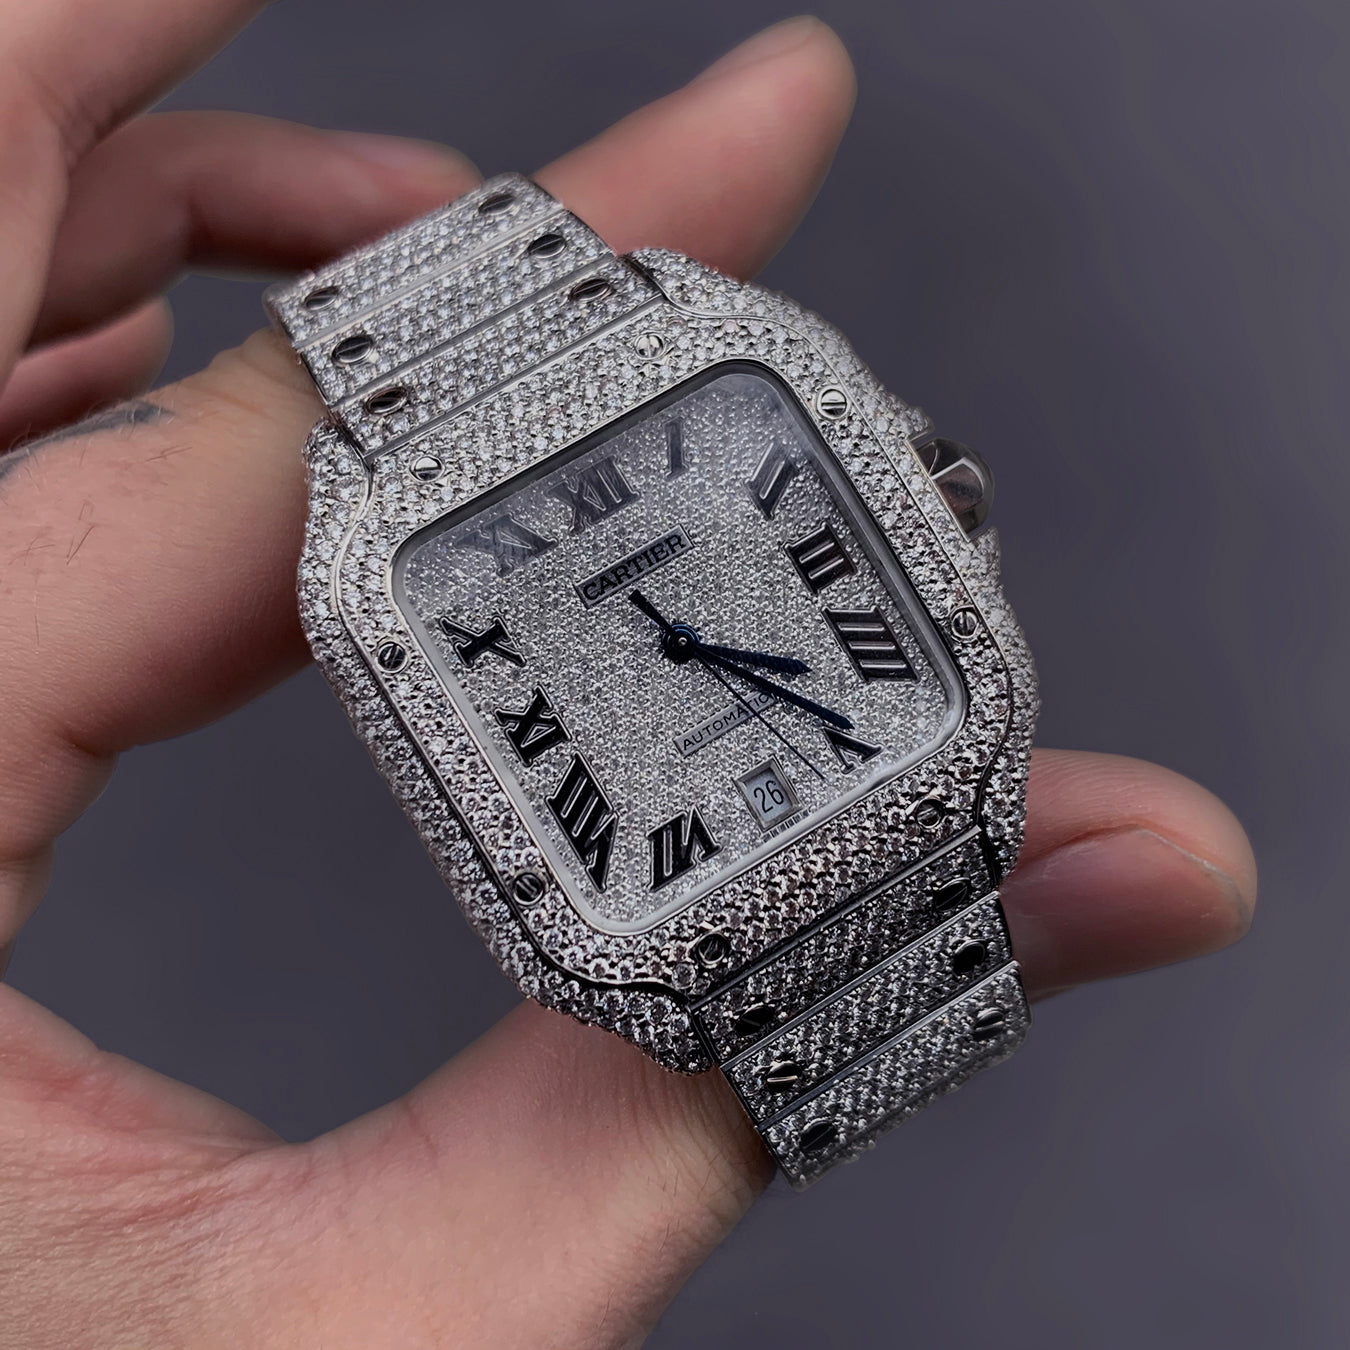 diamond cartier watches